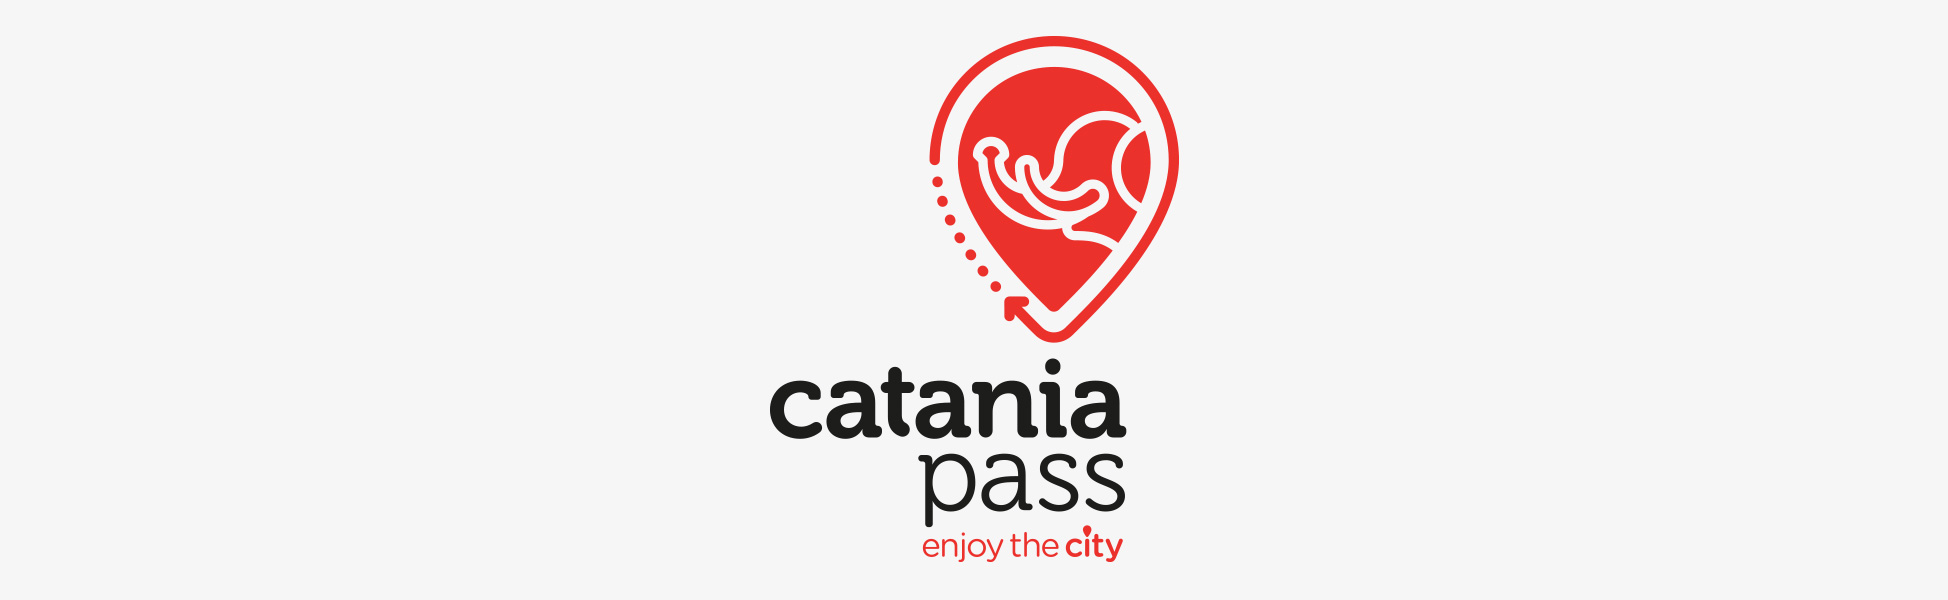 Catania pass